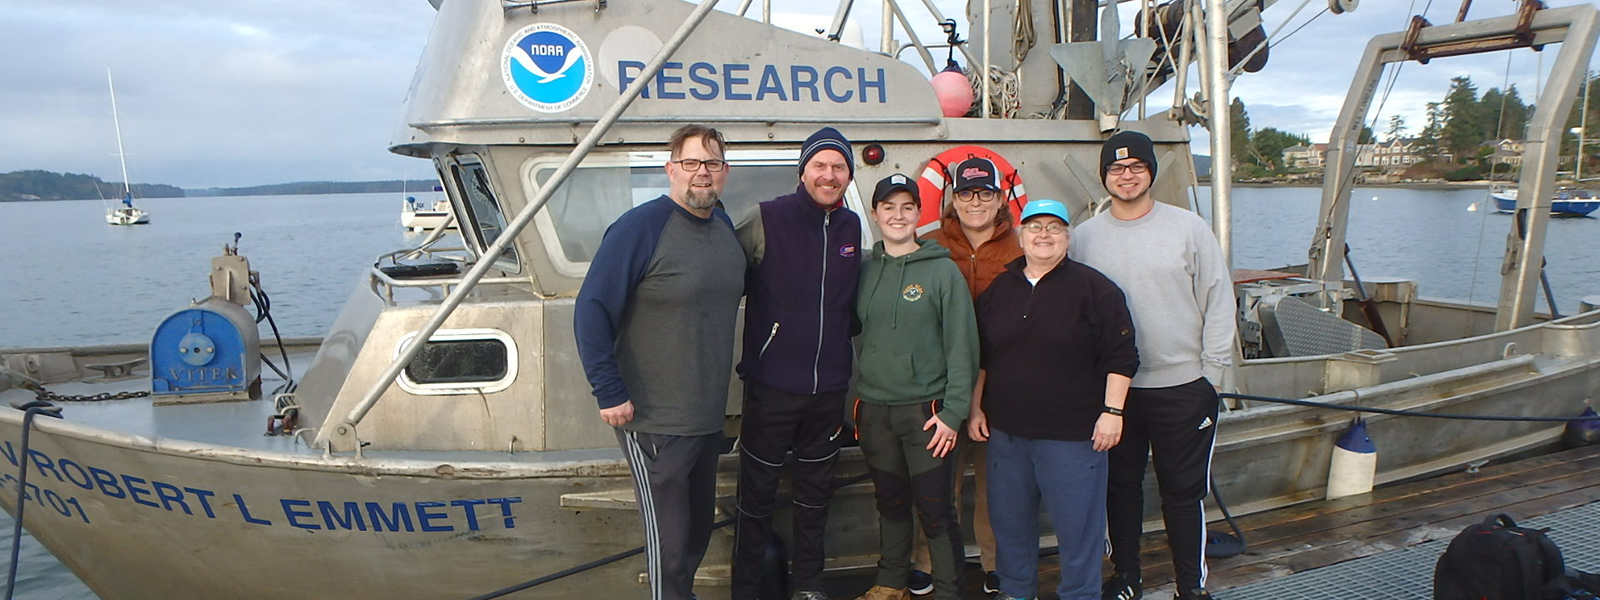 Portrait of research team in front of NOAA vessel Robert L. Emmett